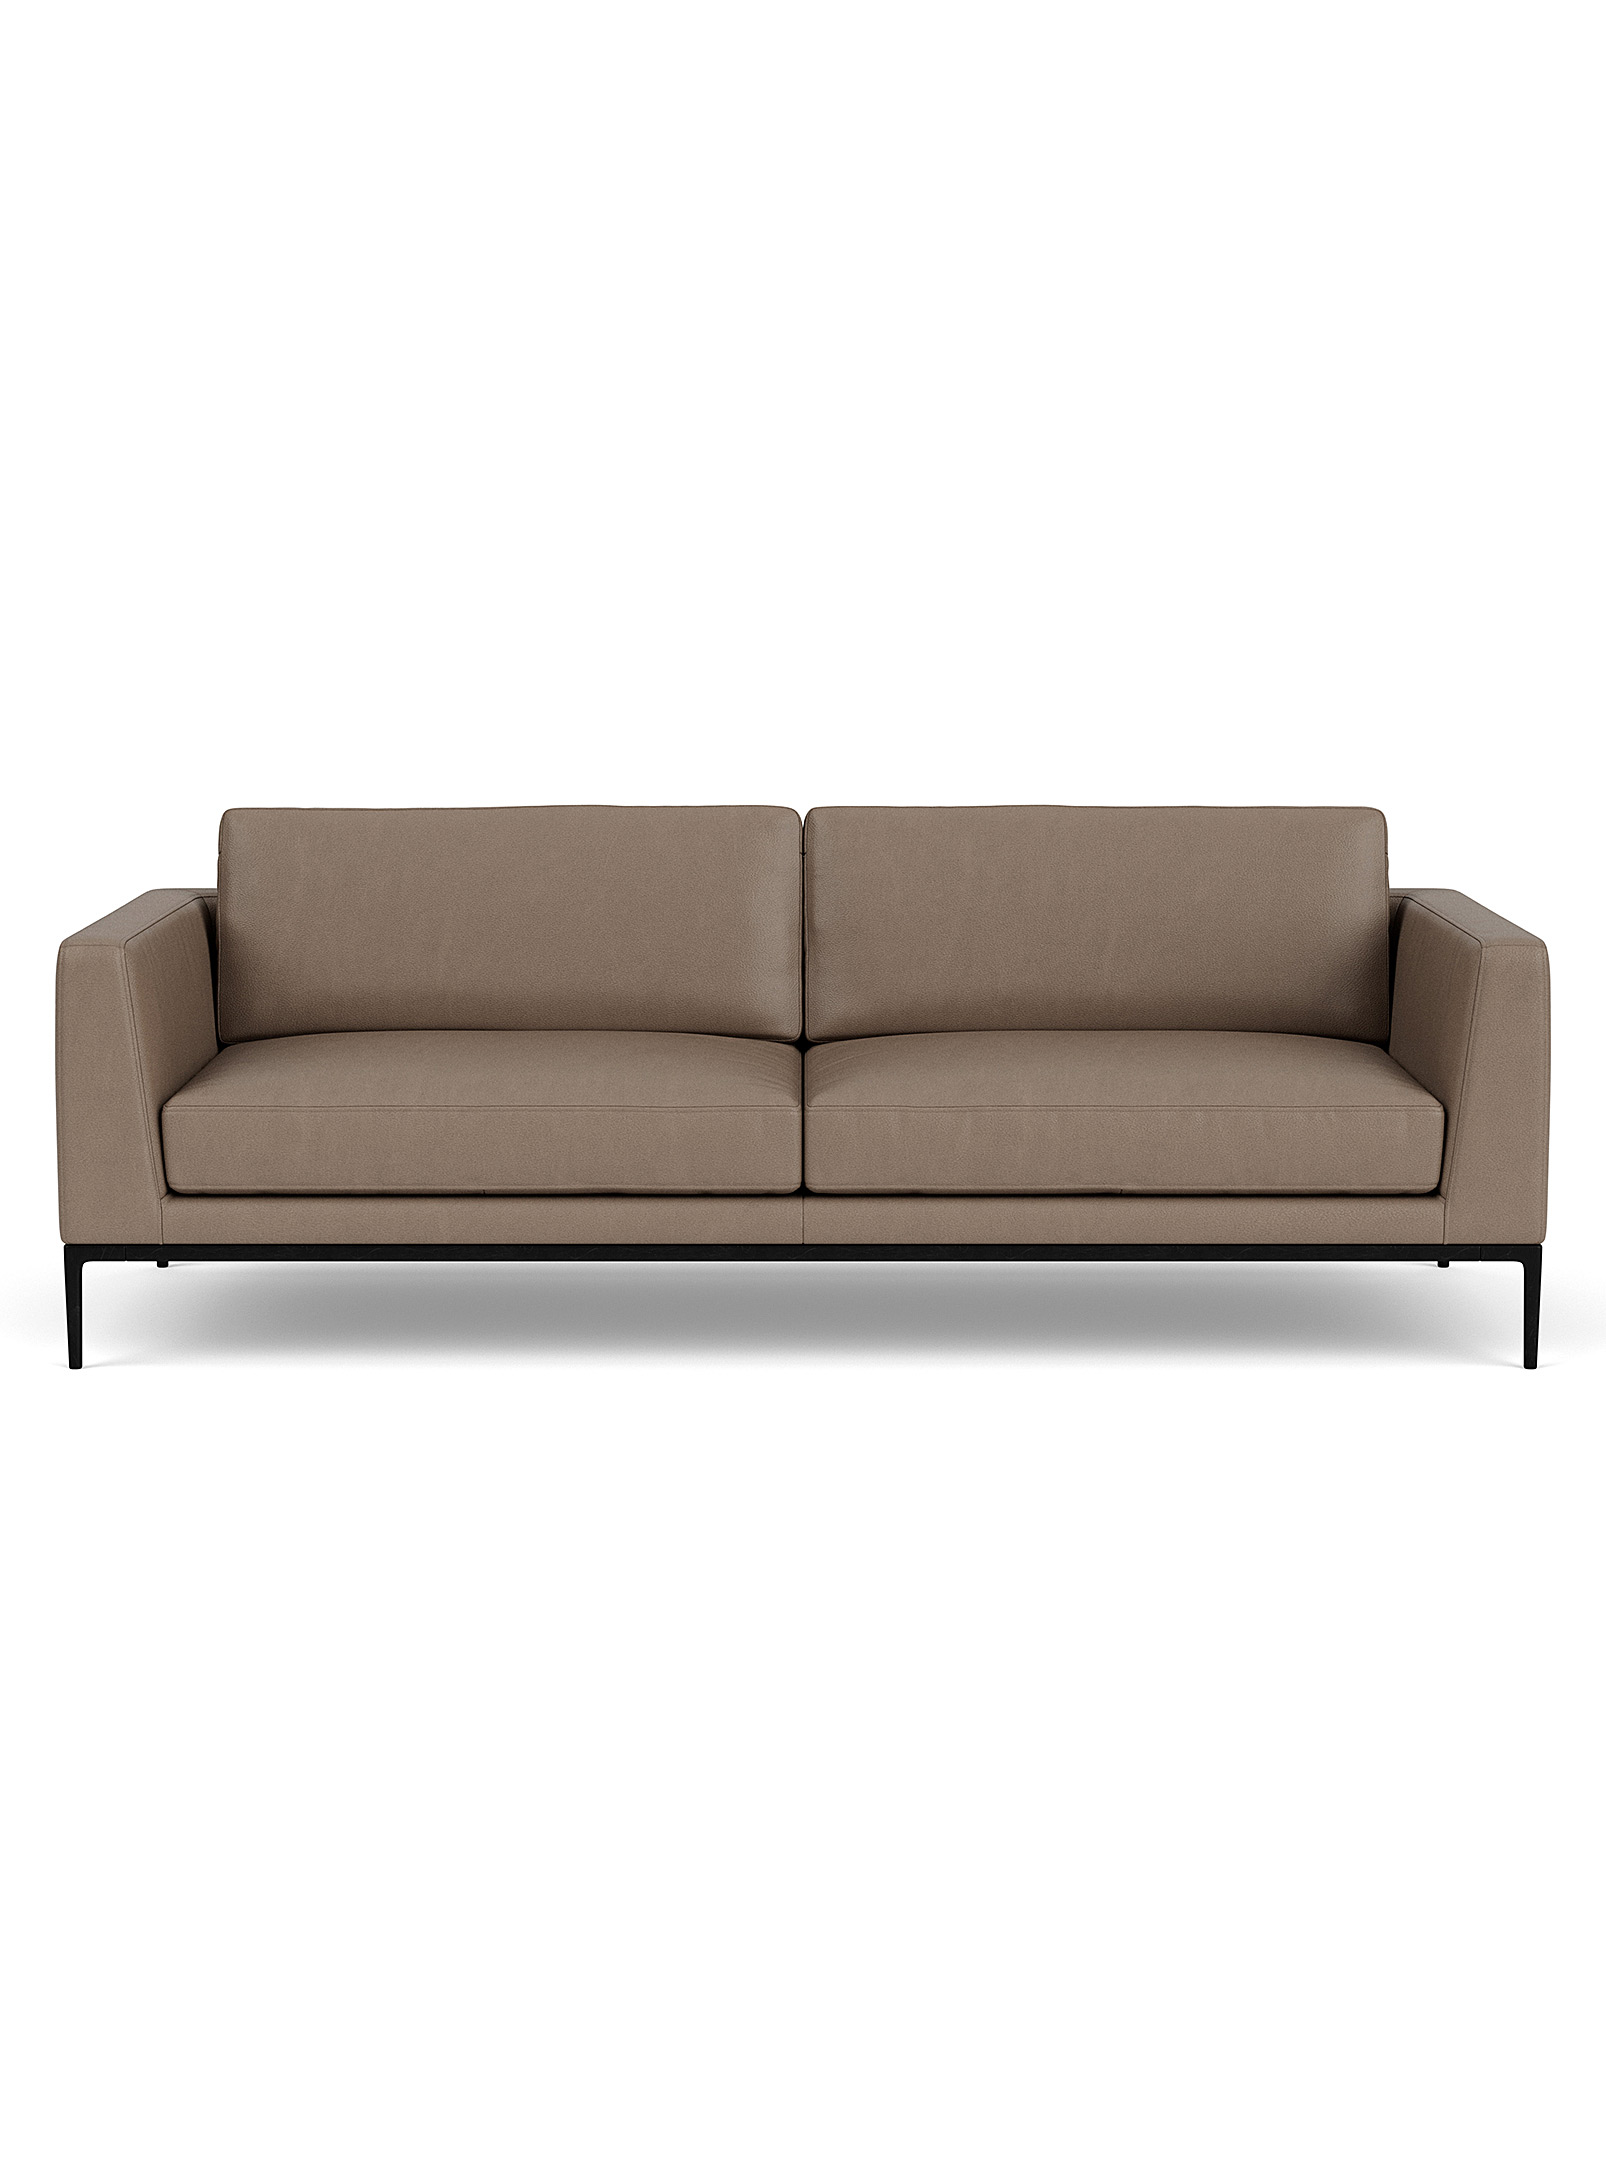 EQ3 - Oma sleek leather couch